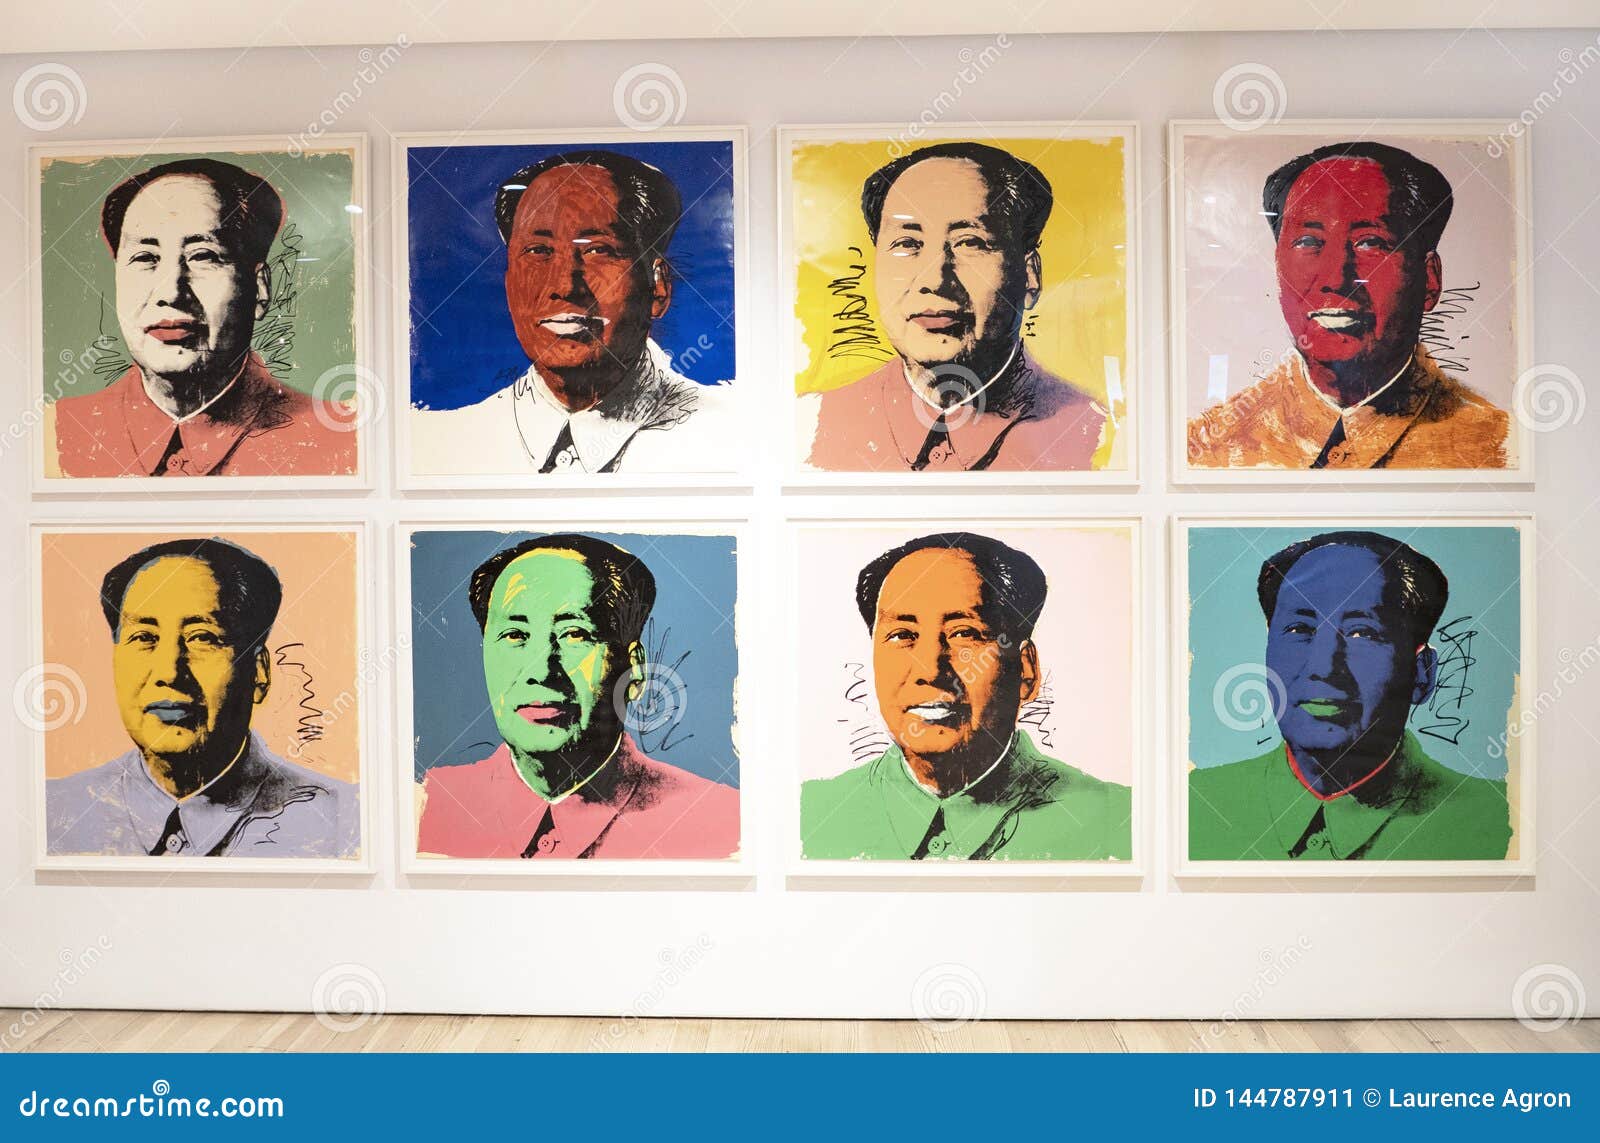 Andy Warhol  Mao Wallpaper Five Copies 1974 printed in 1989  Artsy